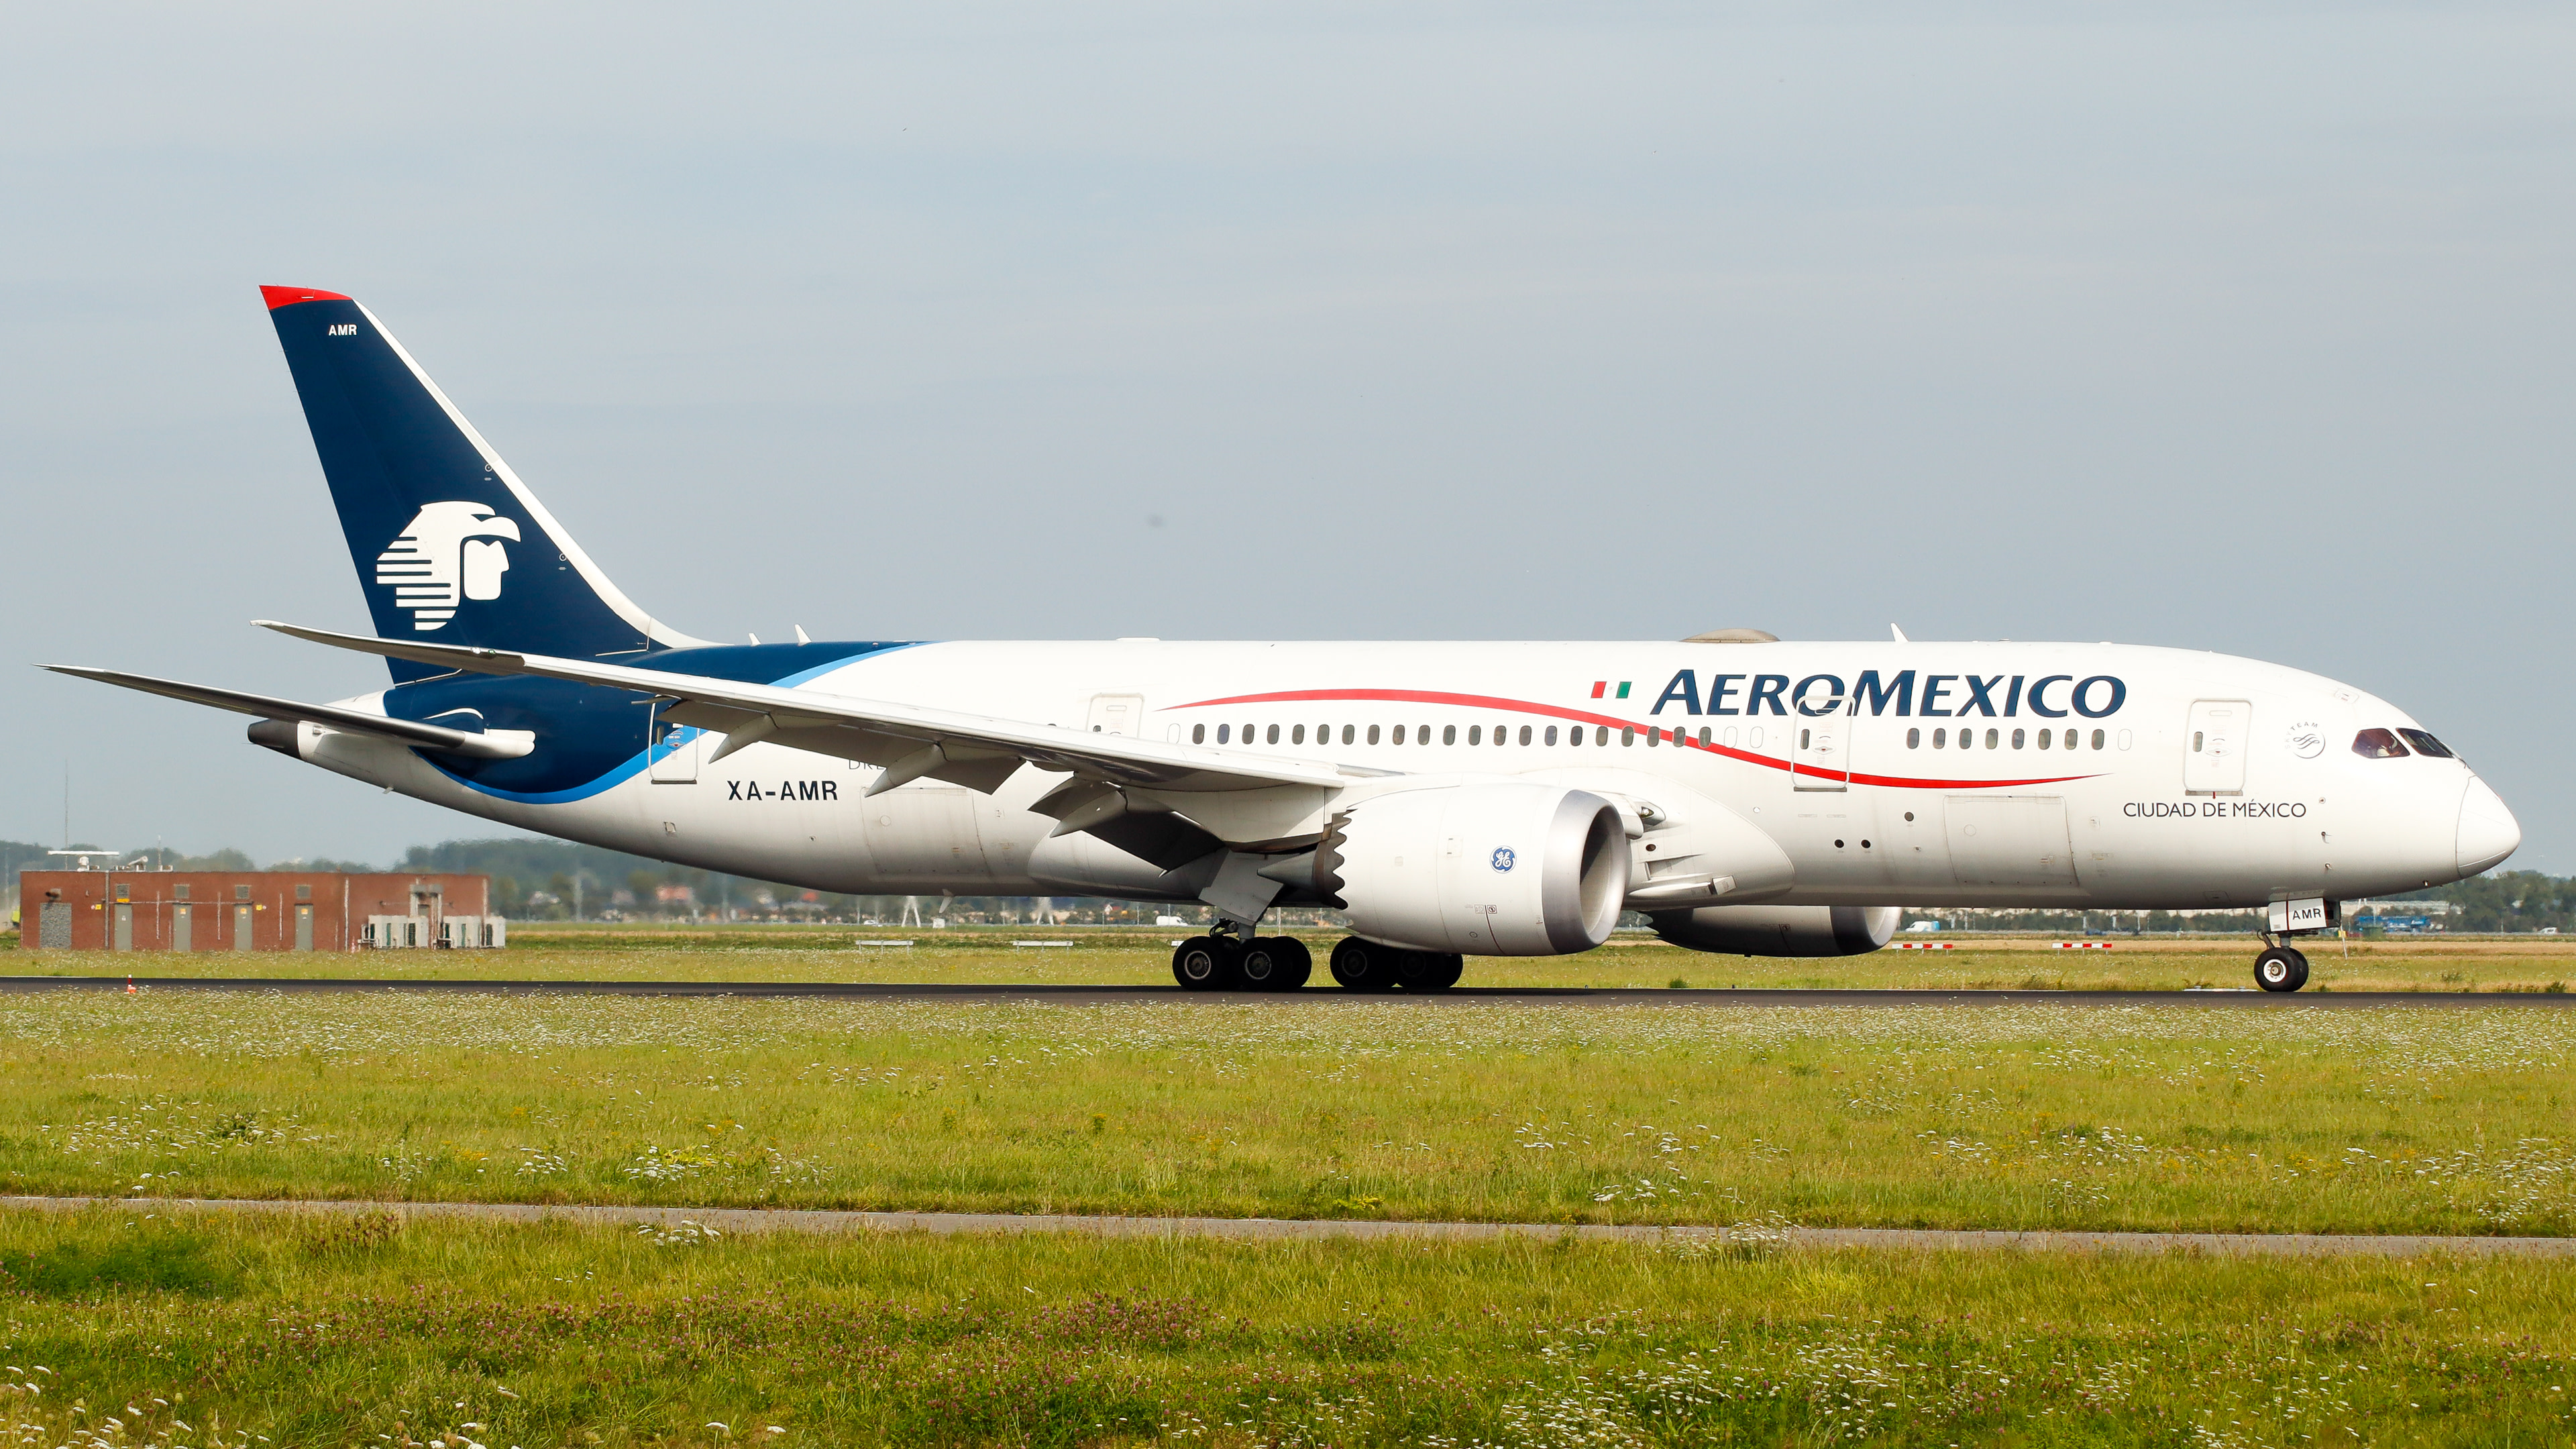  AeroMexico airplane, illustrative (Wikimedia Commons/Gameplayzz)